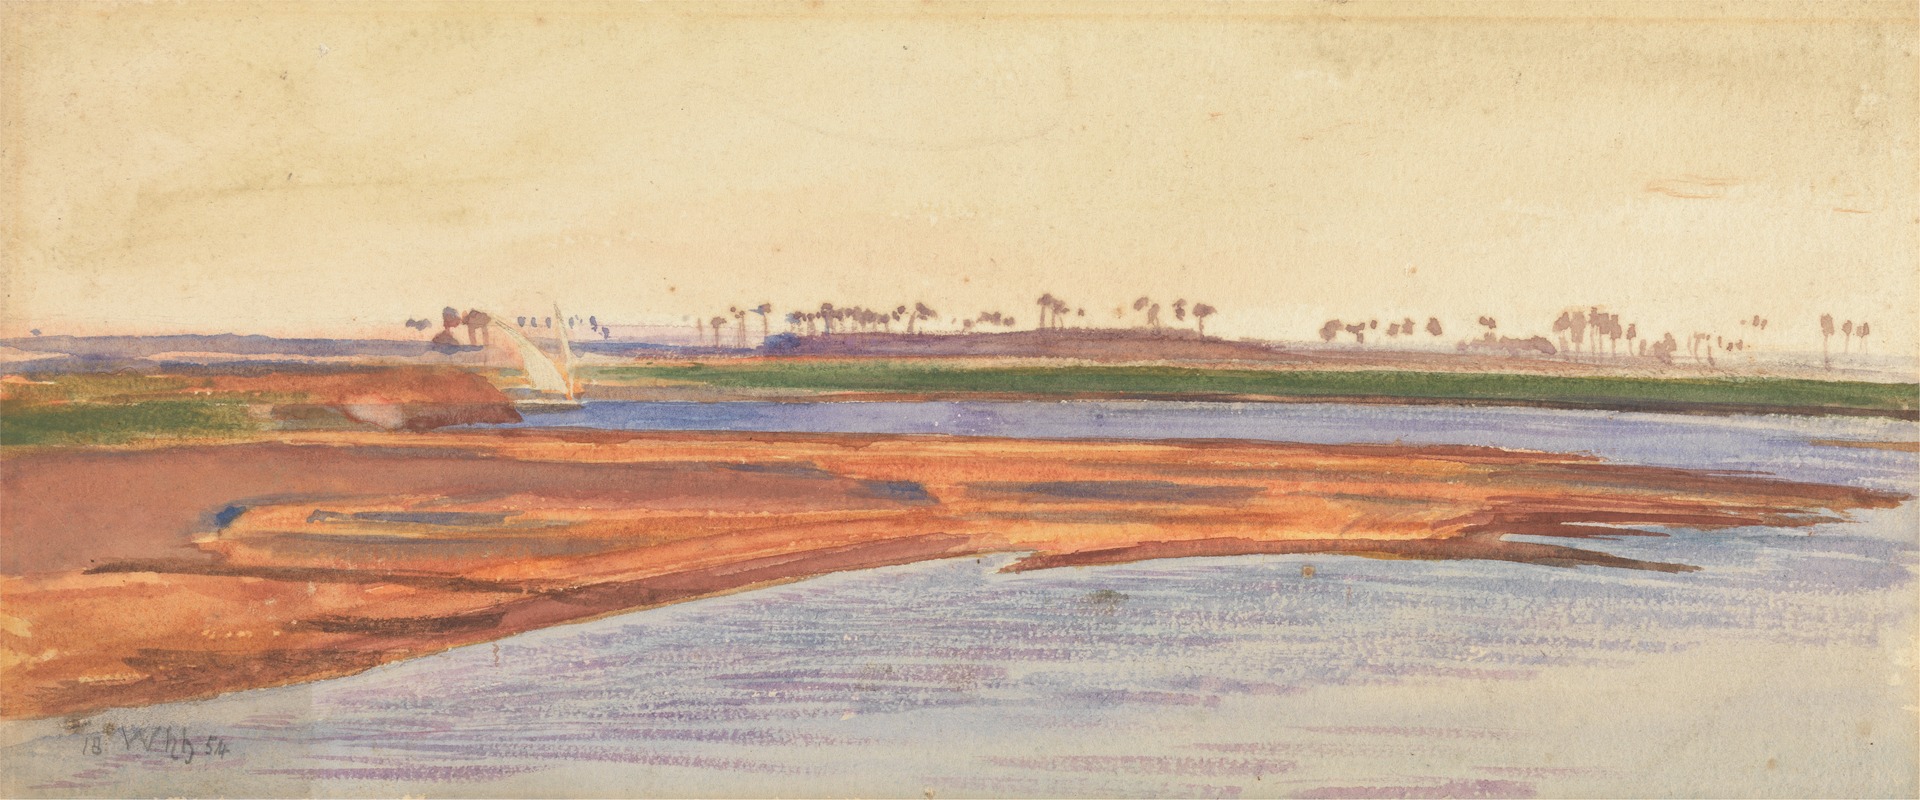 William Holman Hunt - The Nile